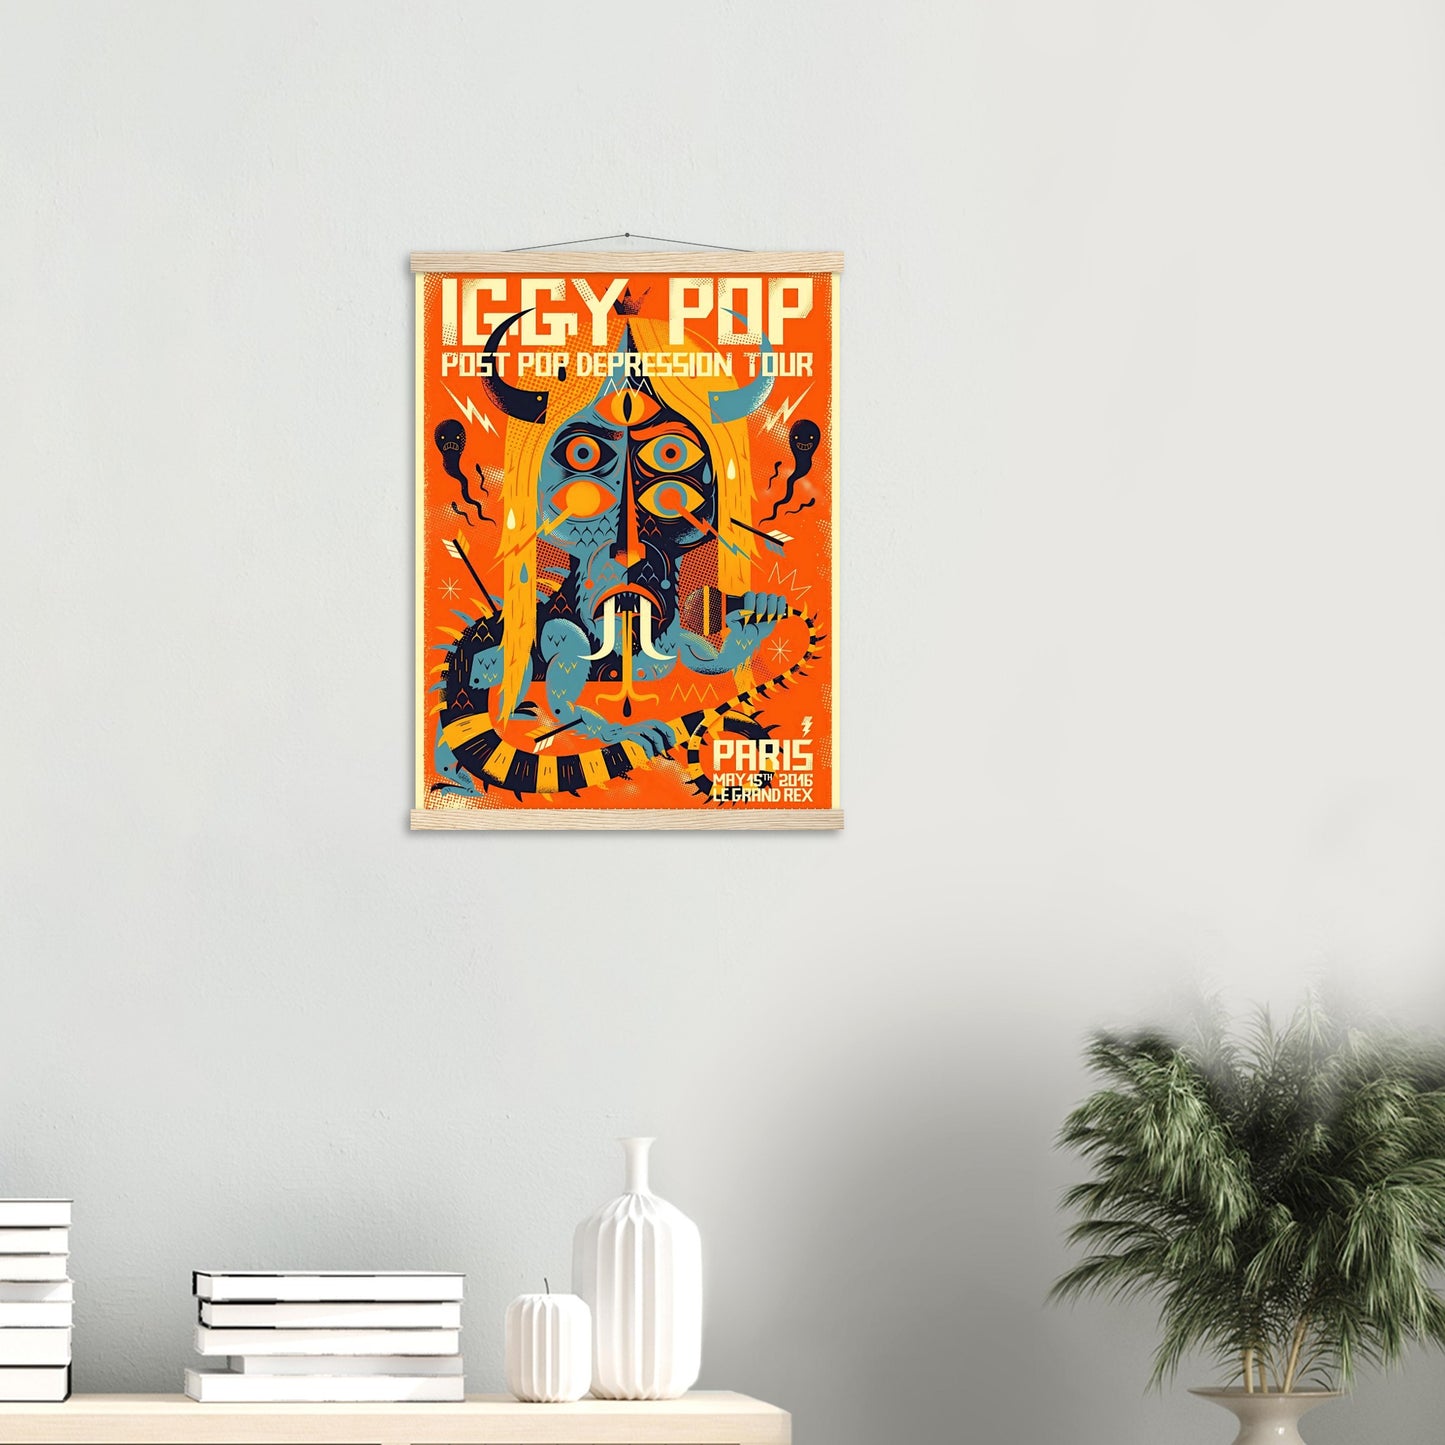 Iggy Pop Vintage Poster Reprint on Premium Matte Paper - Posterify